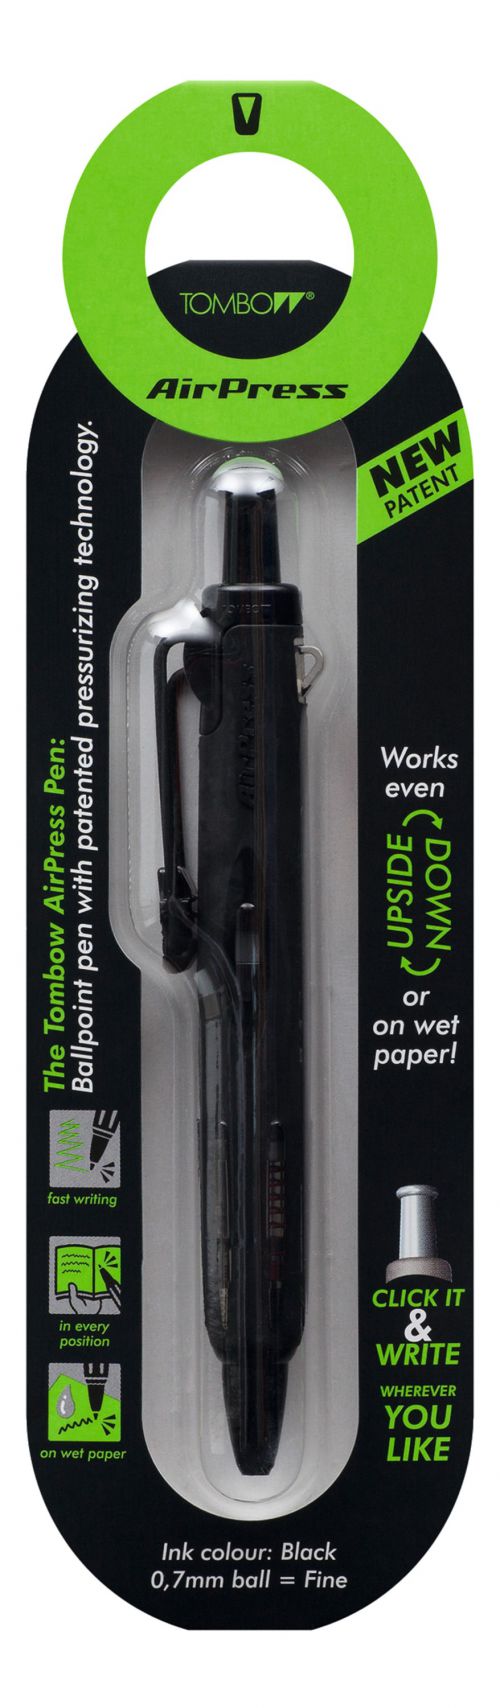 Tombow AirPress Retractable Ballpoint Pen 0.7mm Tip Black Barrel Black Ink